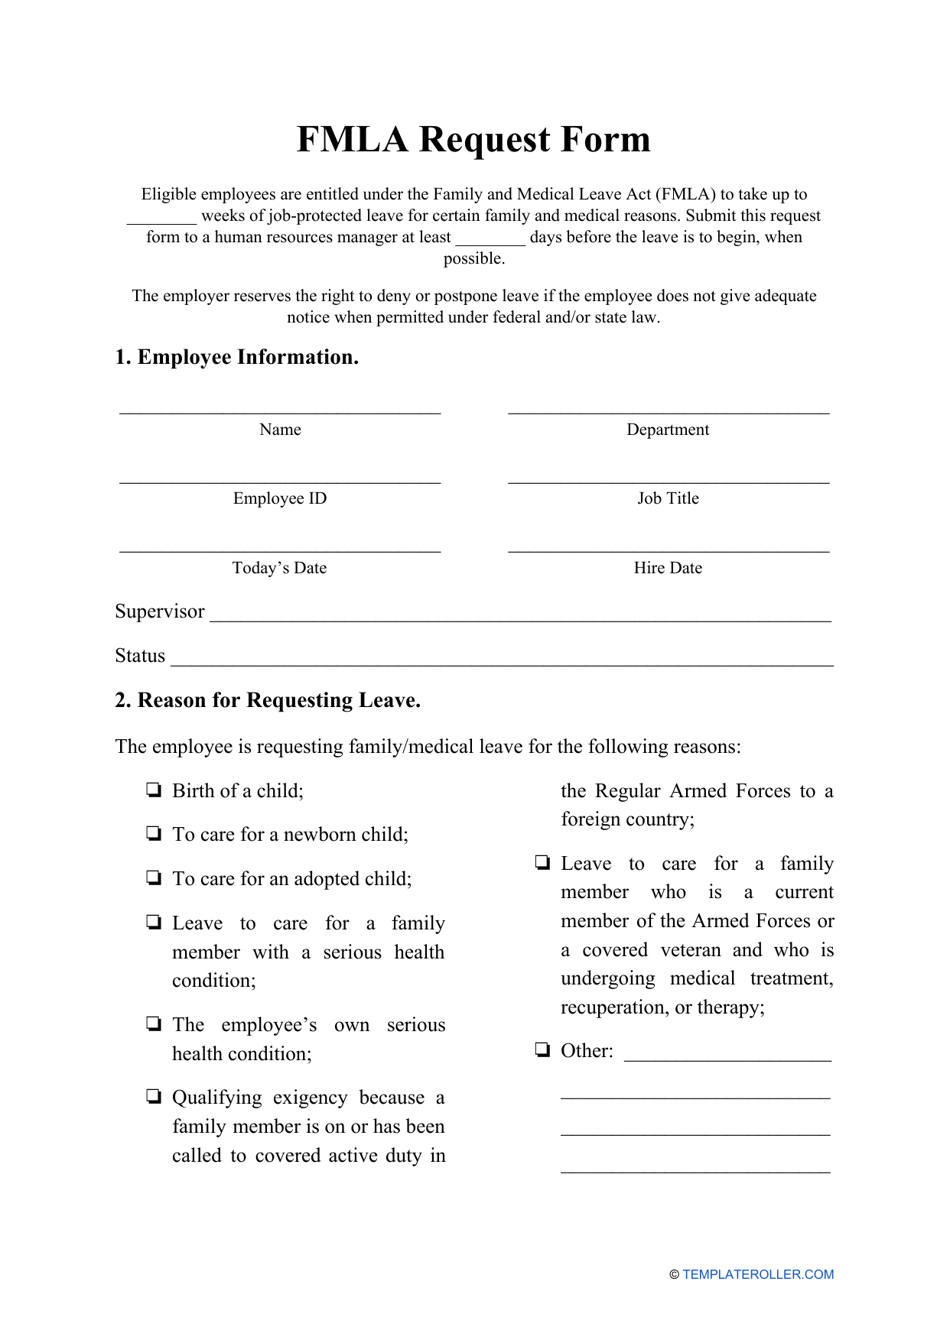 Fmla Request Form Download Printable PDF Templateroller